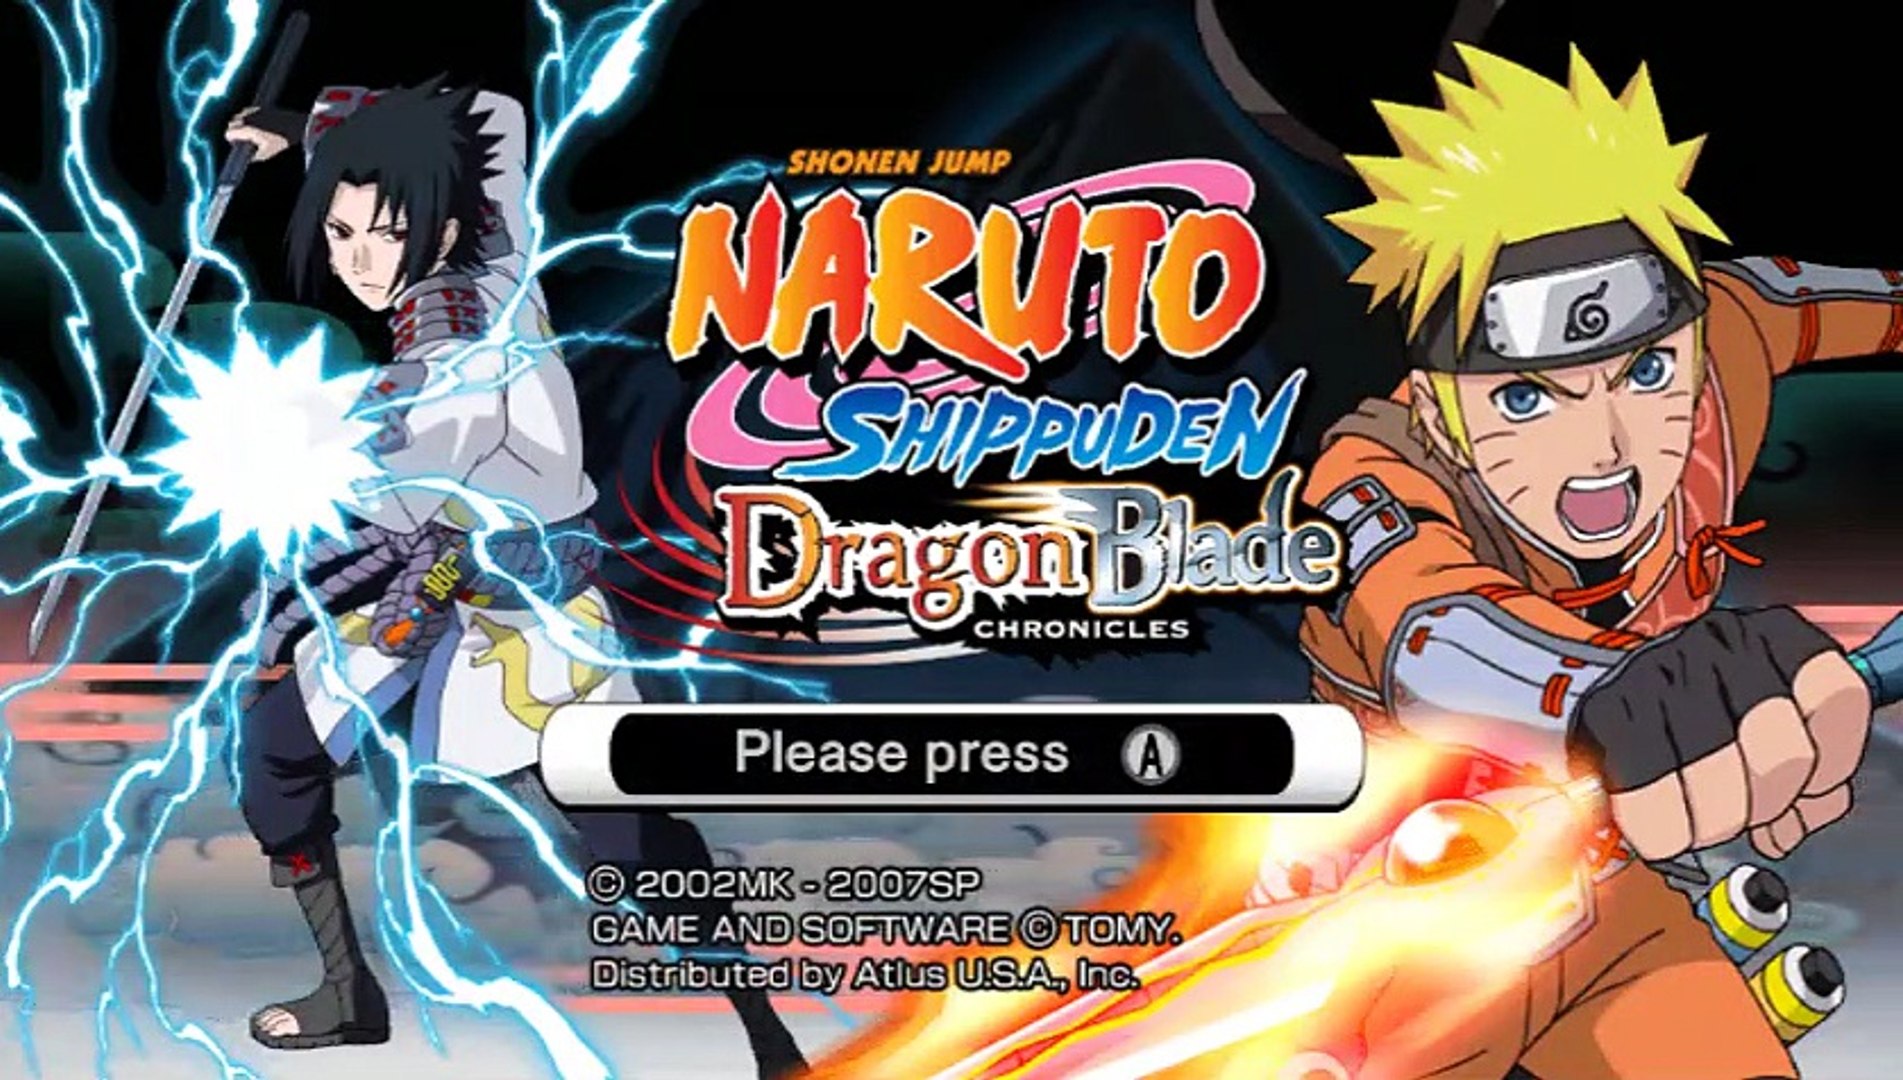 Naruto Shippuden: Dragon Blade Chronicles online multiplayer - wii - Vidéo  Dailymotion